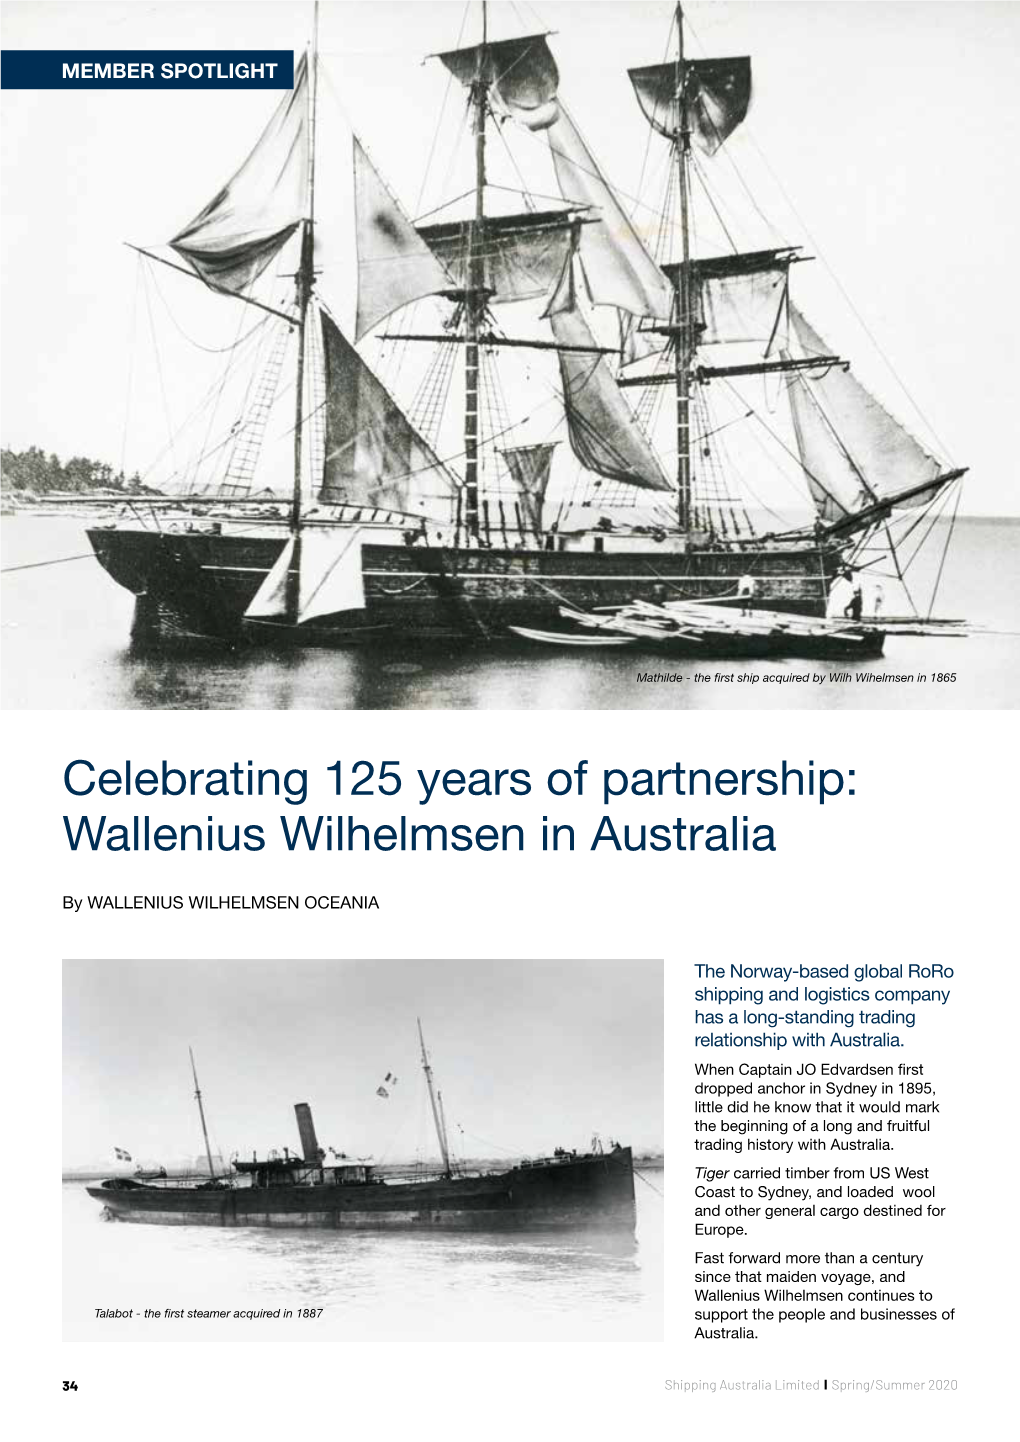 Wallenius Wilhelmsen in Australia